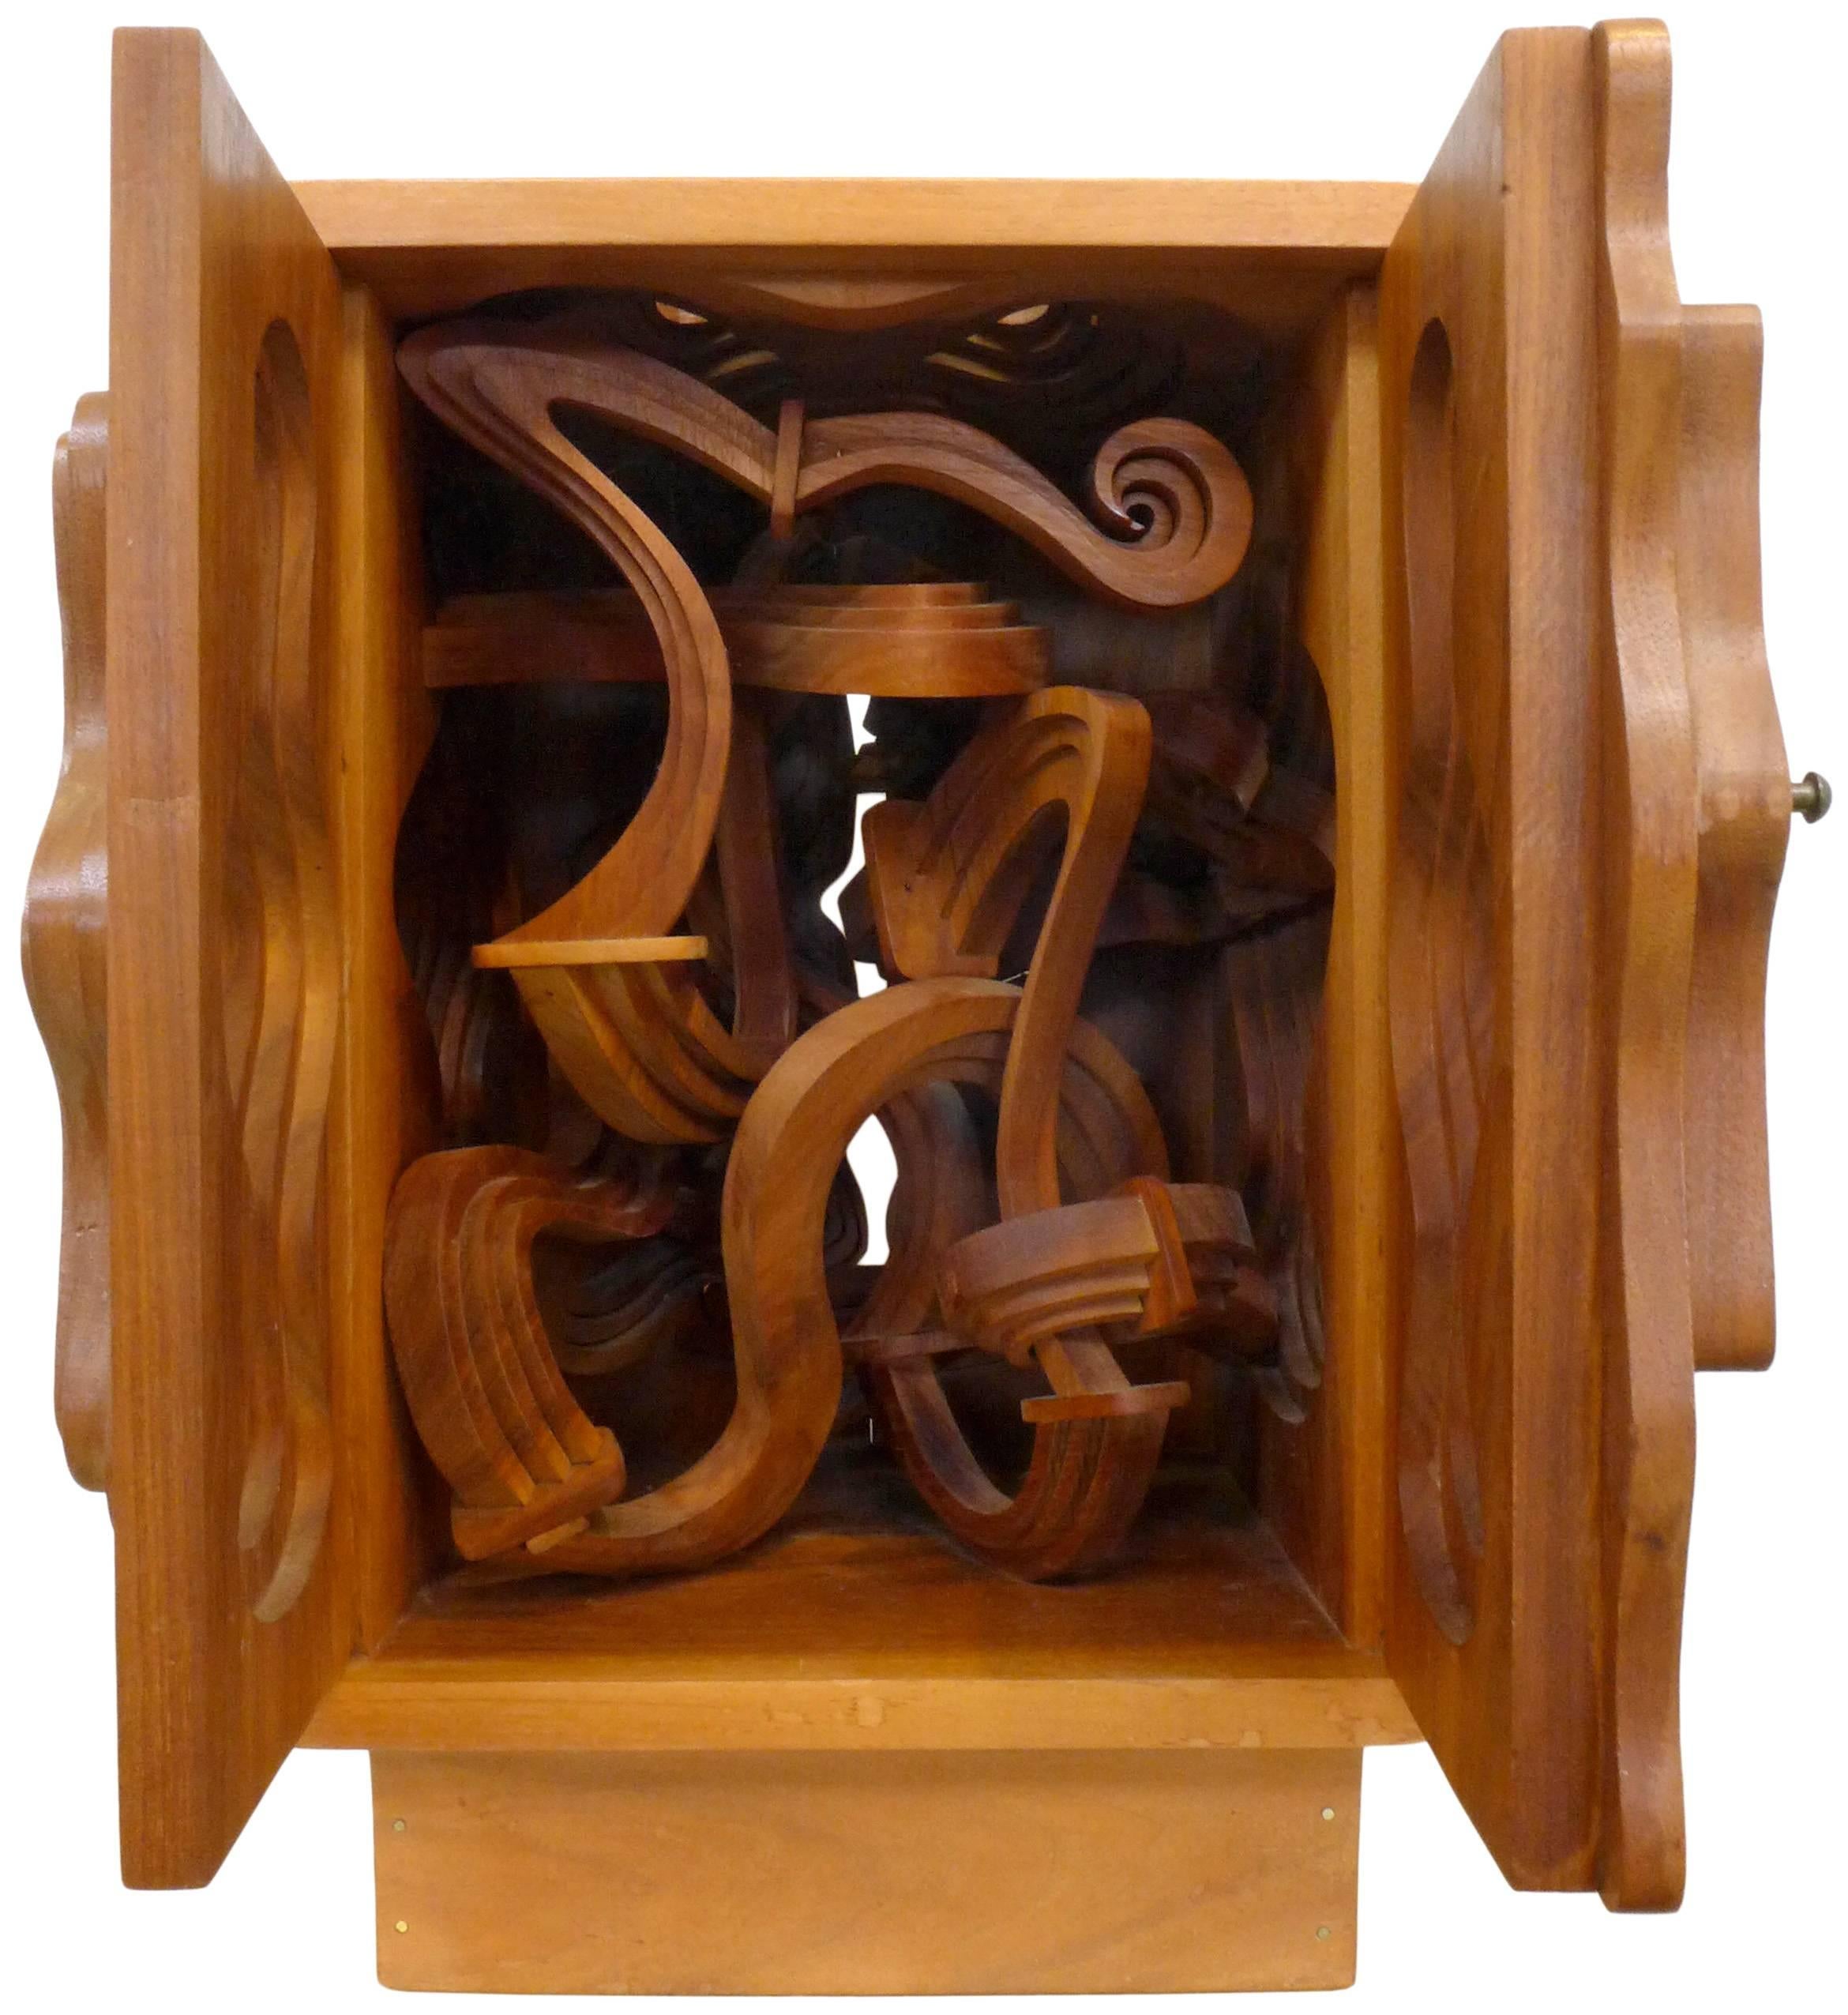 Wood Sculpture Cabinet by John Risley 1